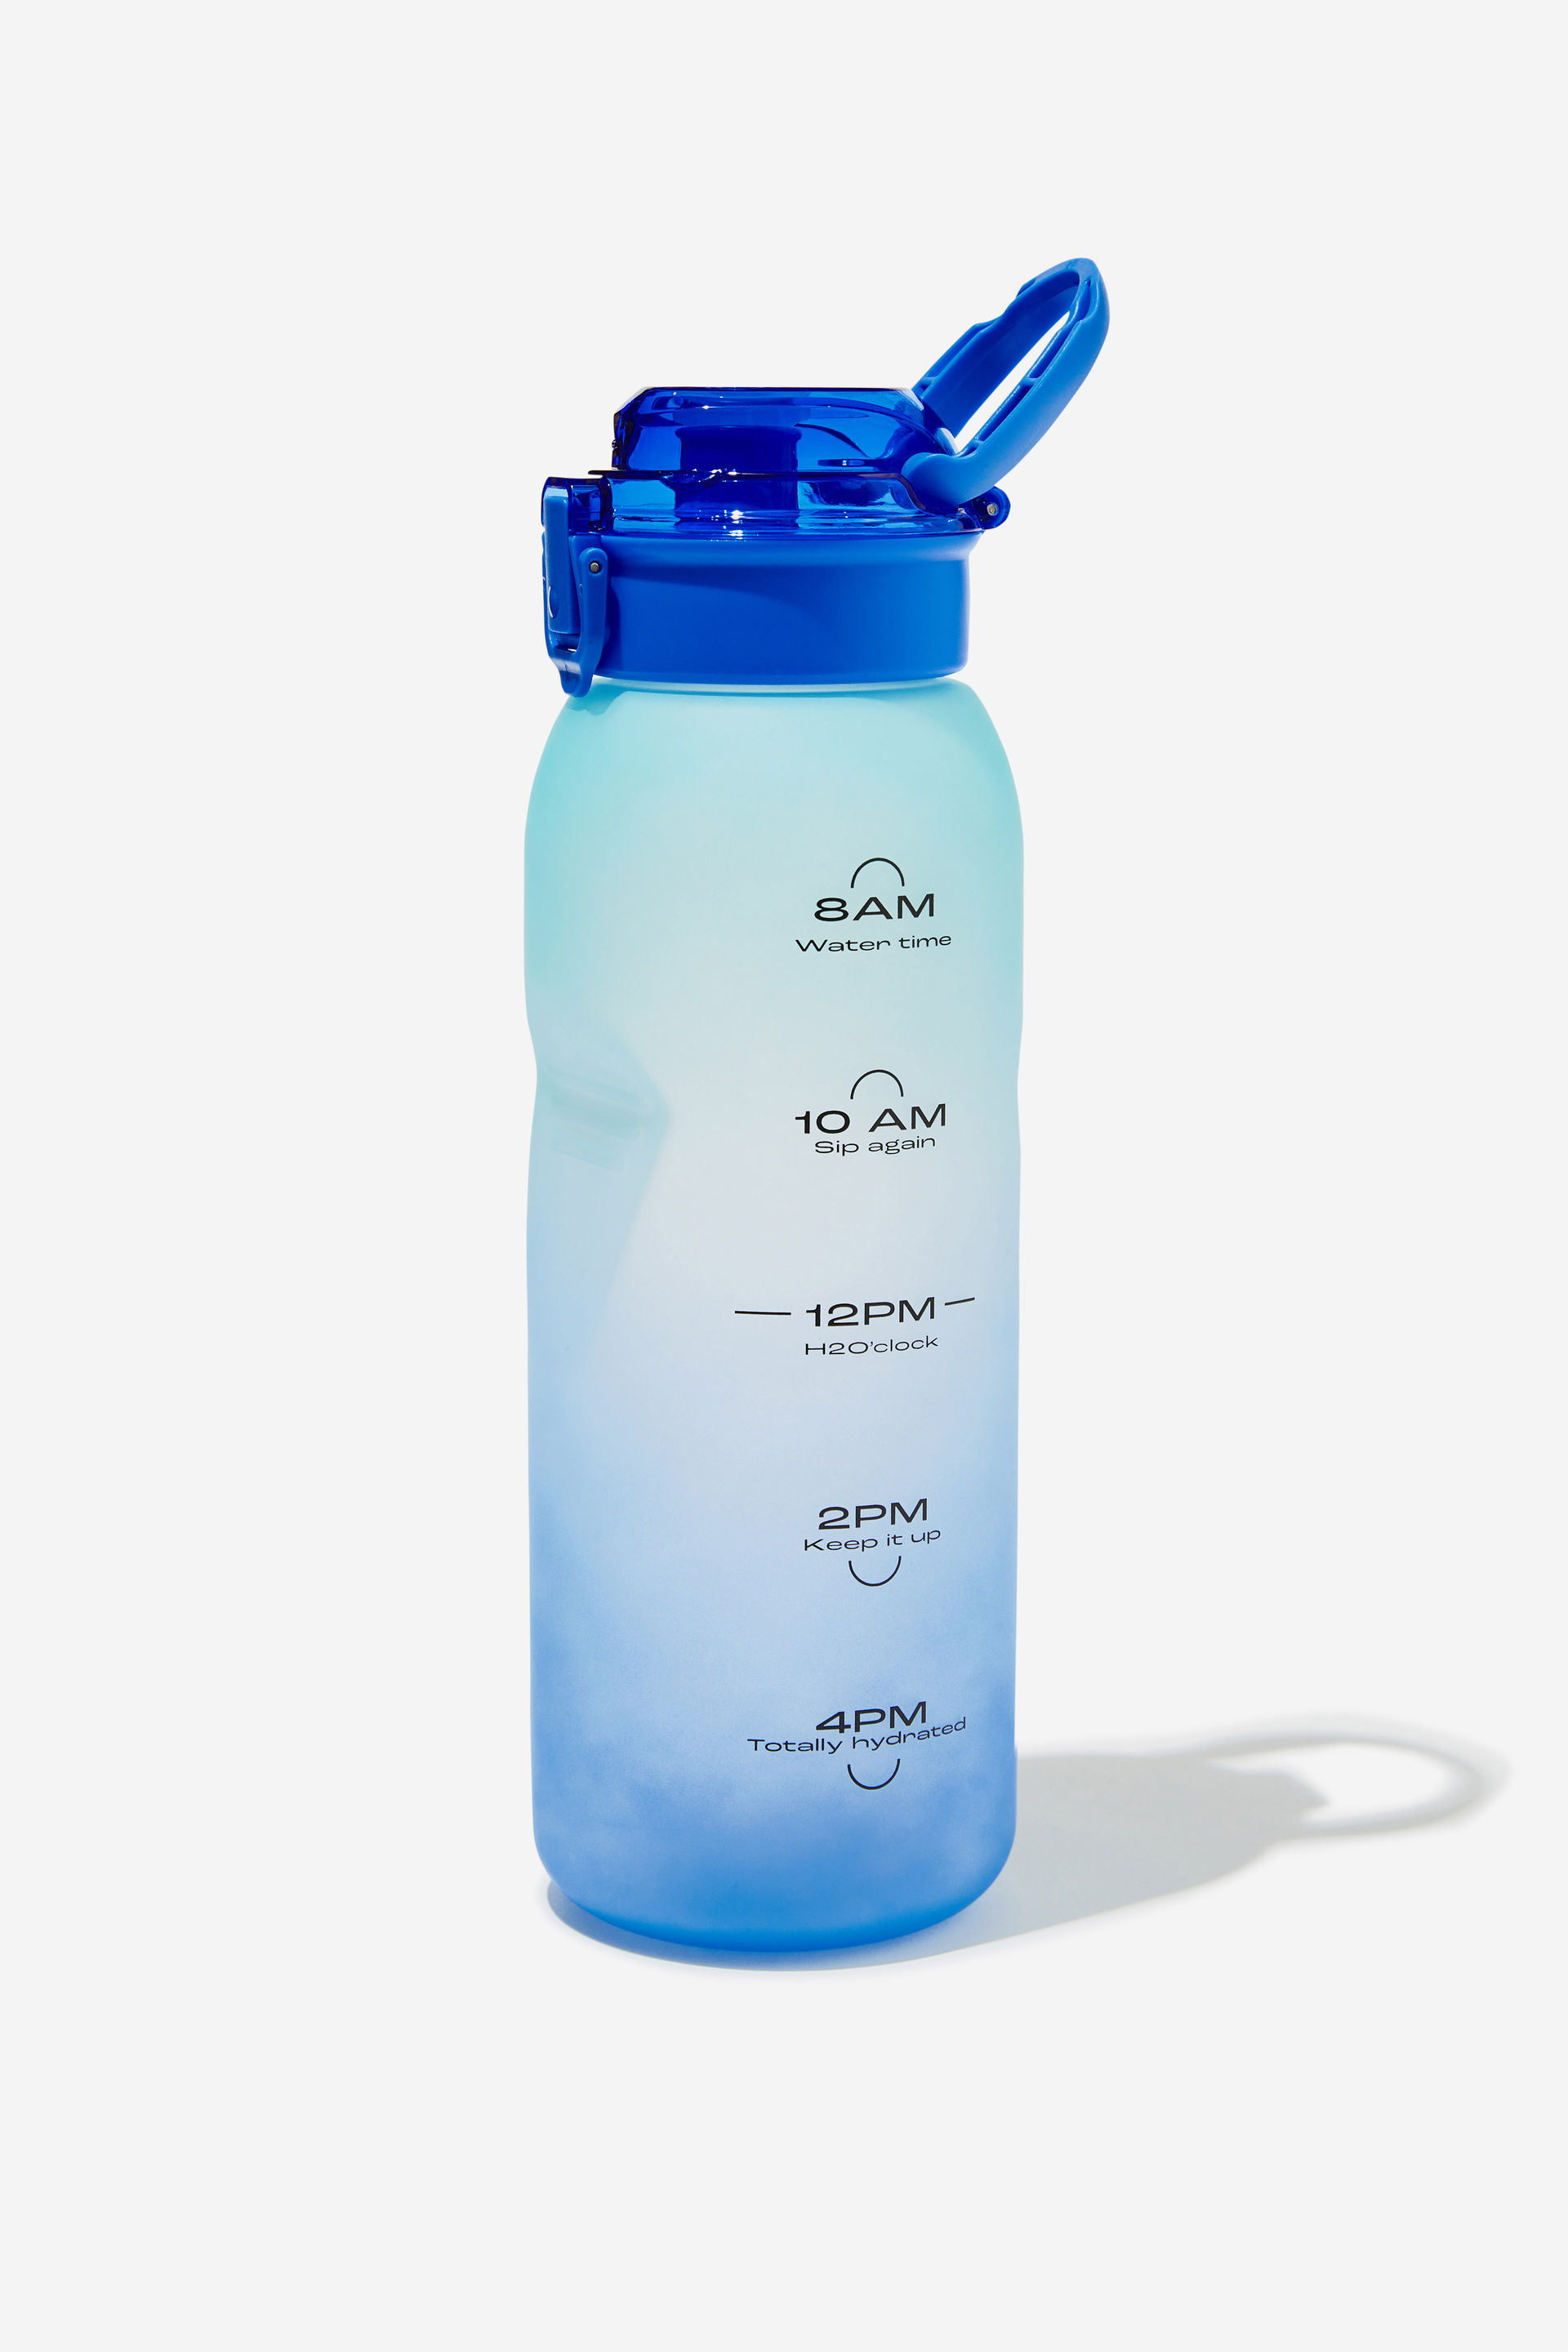 Typo - Heavy Lifter 1.5 L Drink Bottle - Arctic coastal blue ombre